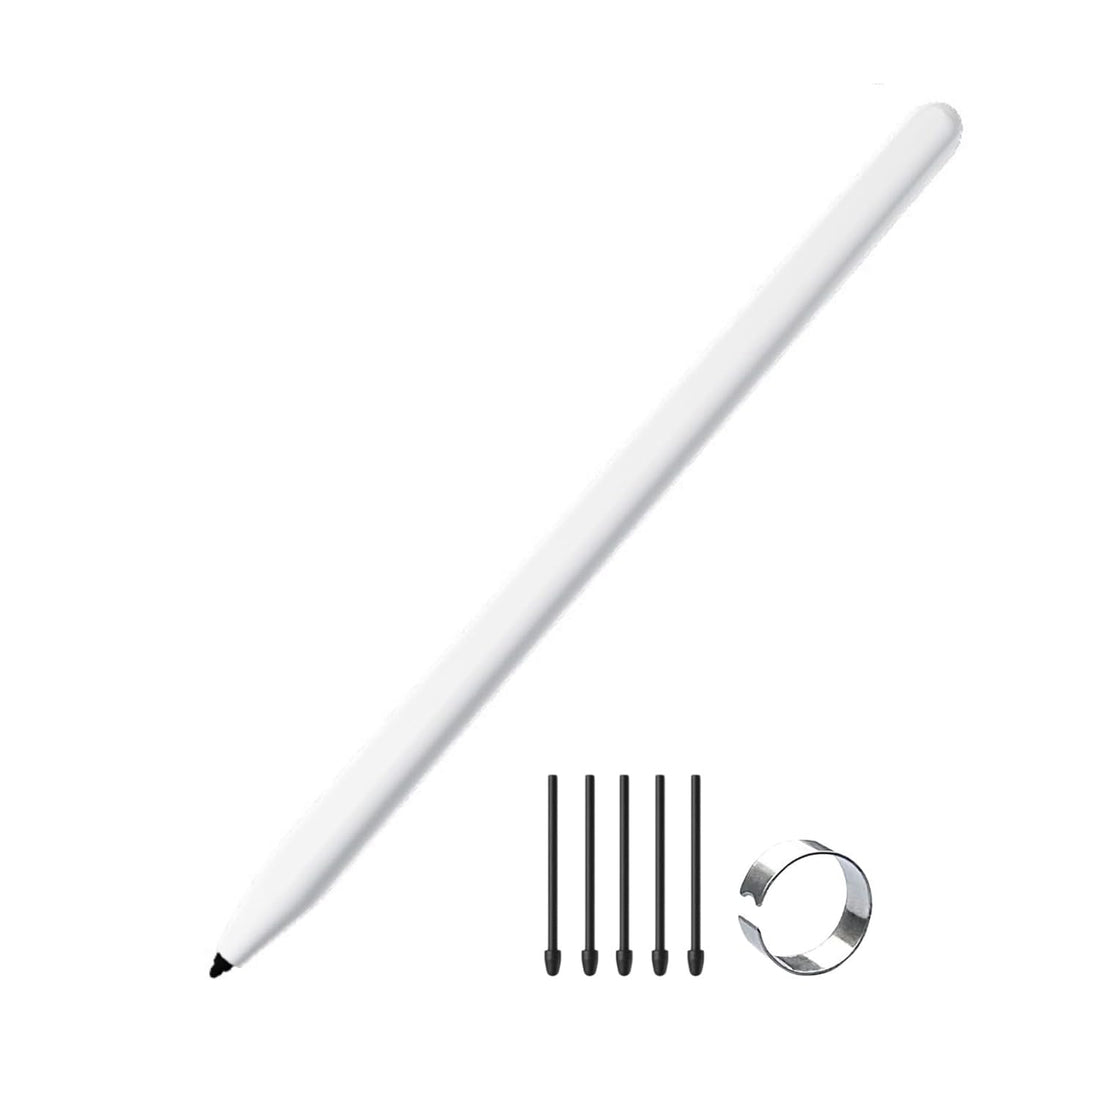 Marker Pen Replacement for Remarkable 2, Digital Eraser,4096 Pressure Sensitivity, Palm Rejection, Remarkable Plus Pen Remarkable2 Stylus Pen with 5Pcs Tips/Nibs (White)